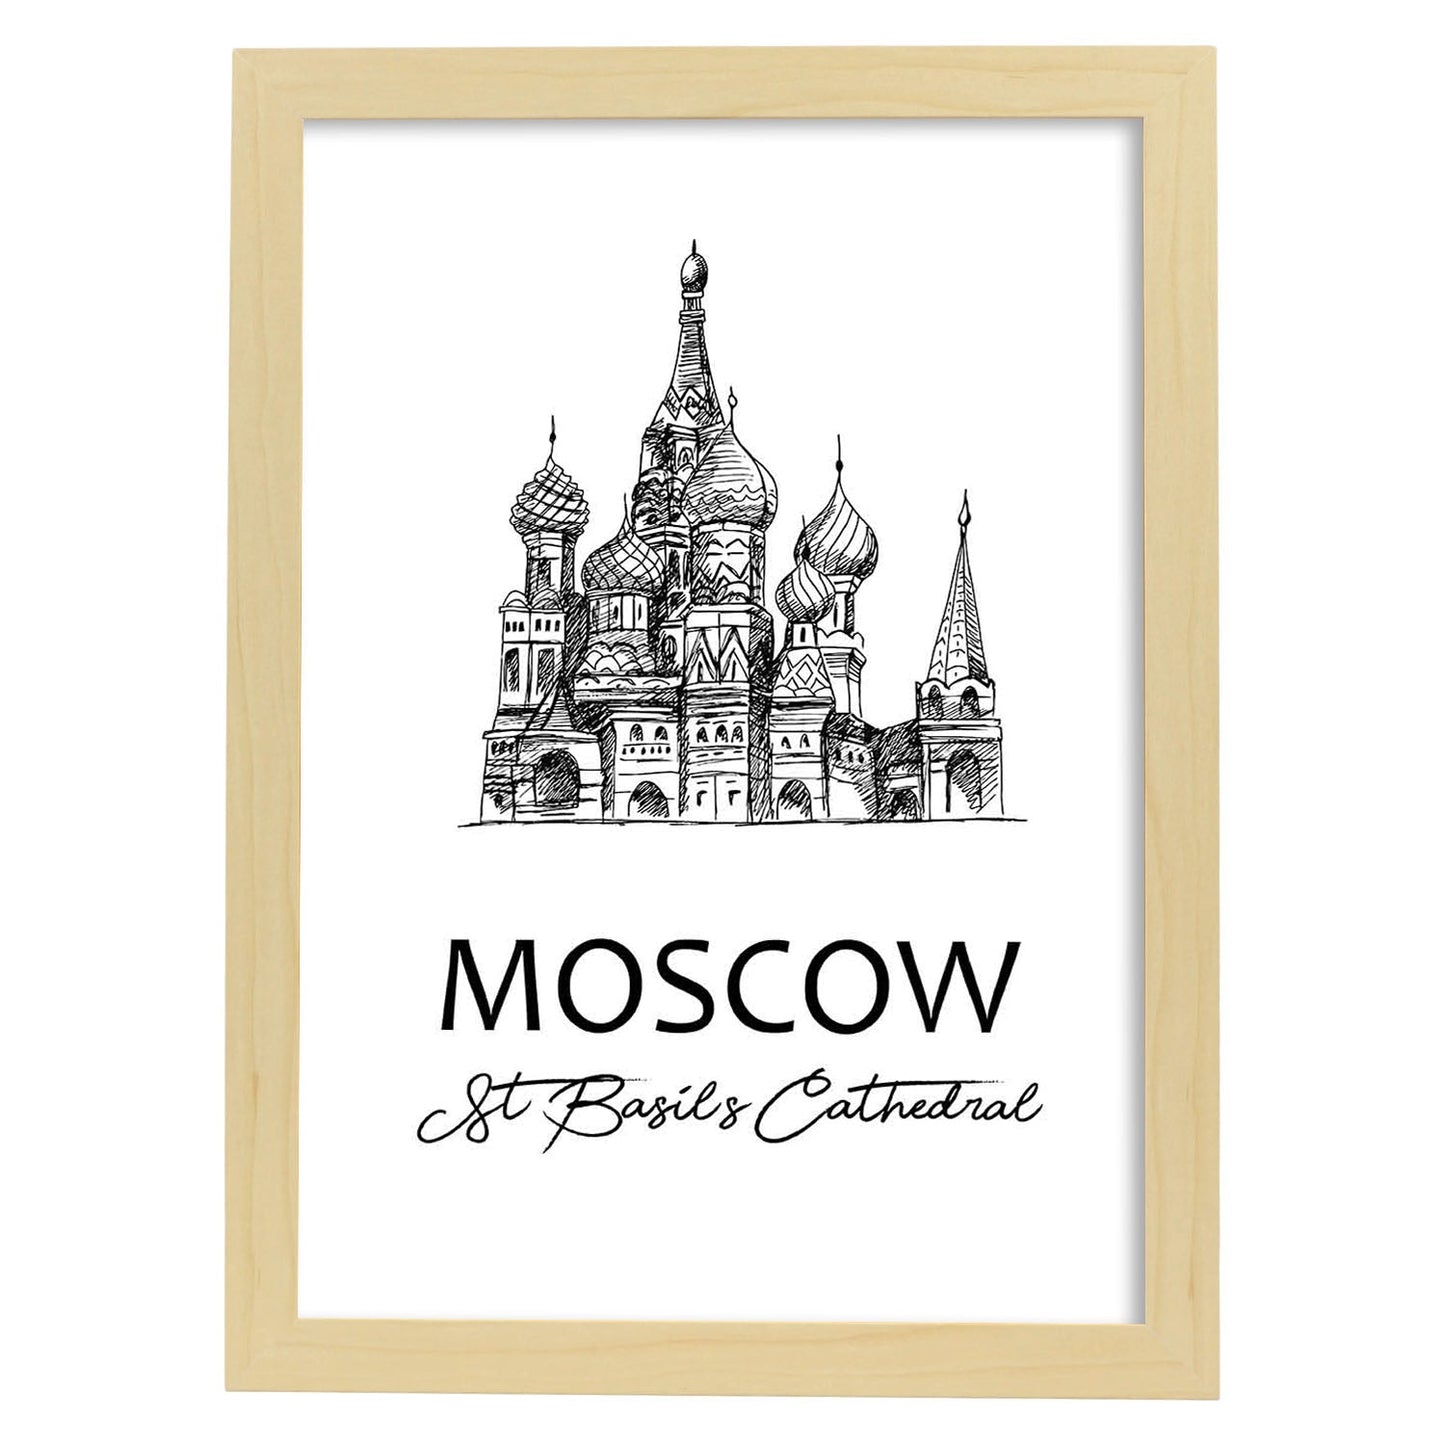 Poster de Moscú - Catedral de San Basilio. Láminas con monumentos de ciudades.-Artwork-Nacnic-A4-Marco Madera clara-Nacnic Estudio SL